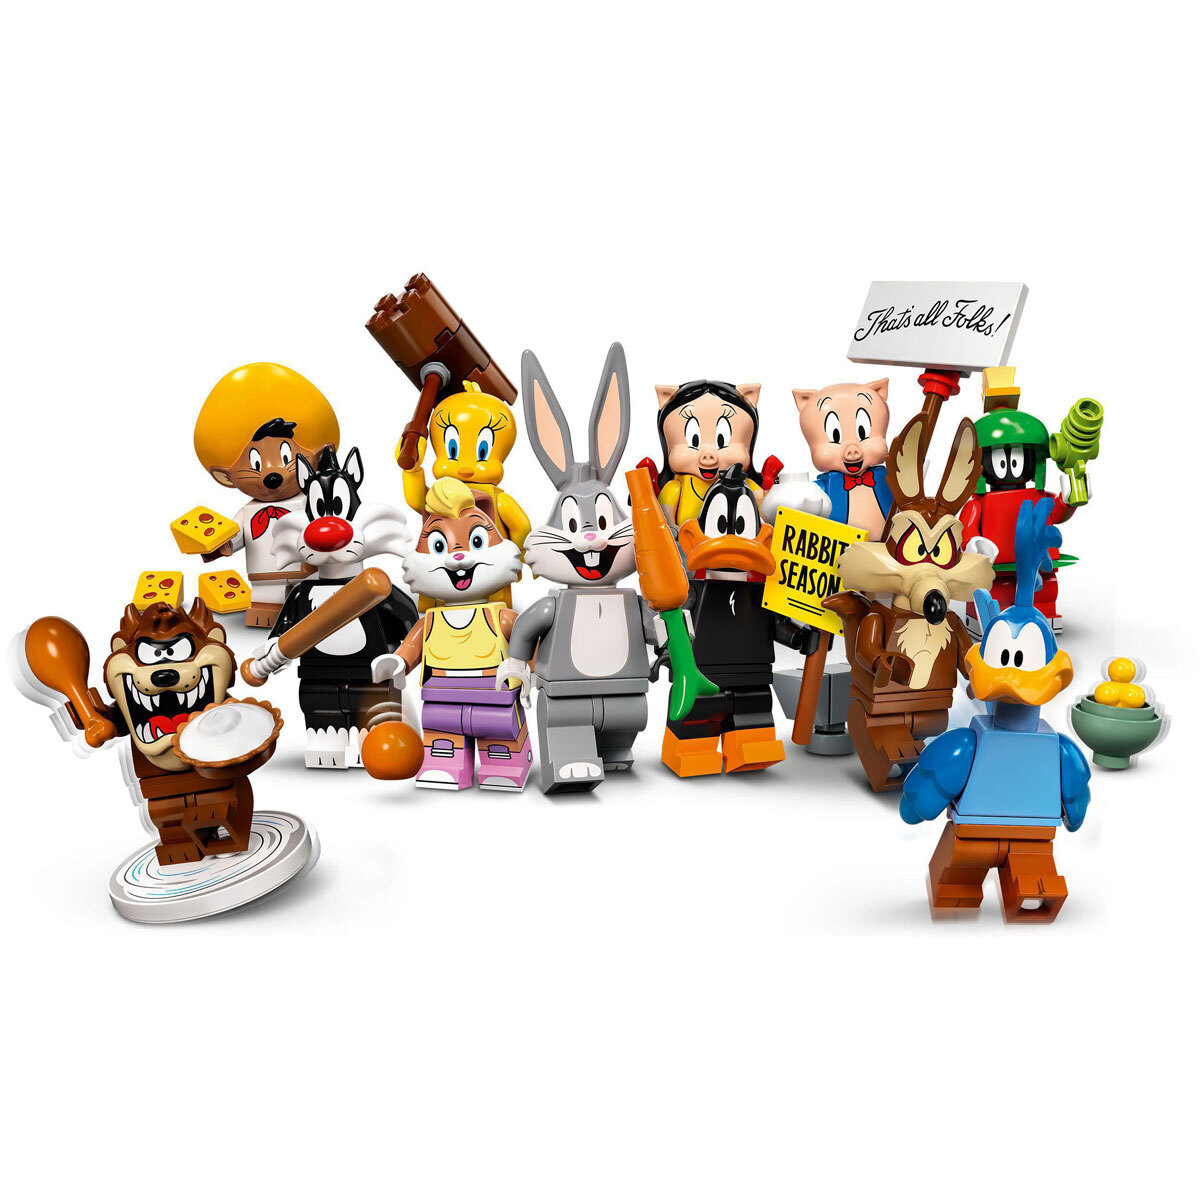 Buy LEGO Minifigures Looney Tunes 71030 All Figures 1 Image at Costco.co.uk